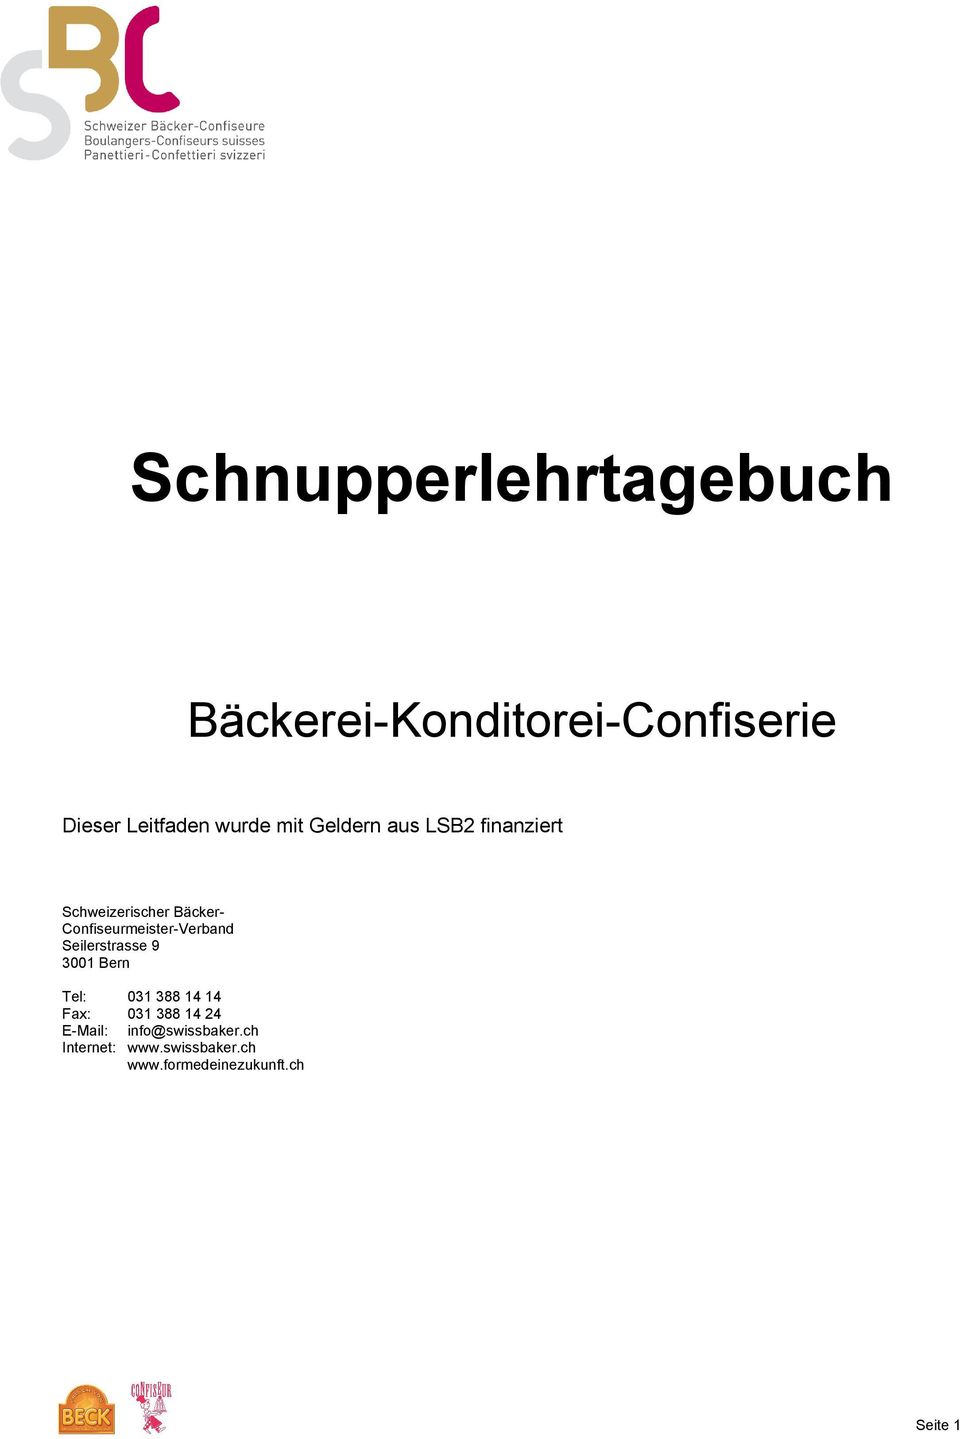 Confiseurmeister-Verband Seilerstrasse 9 3001 Bern Tel: 031 388 14 14 Fax: